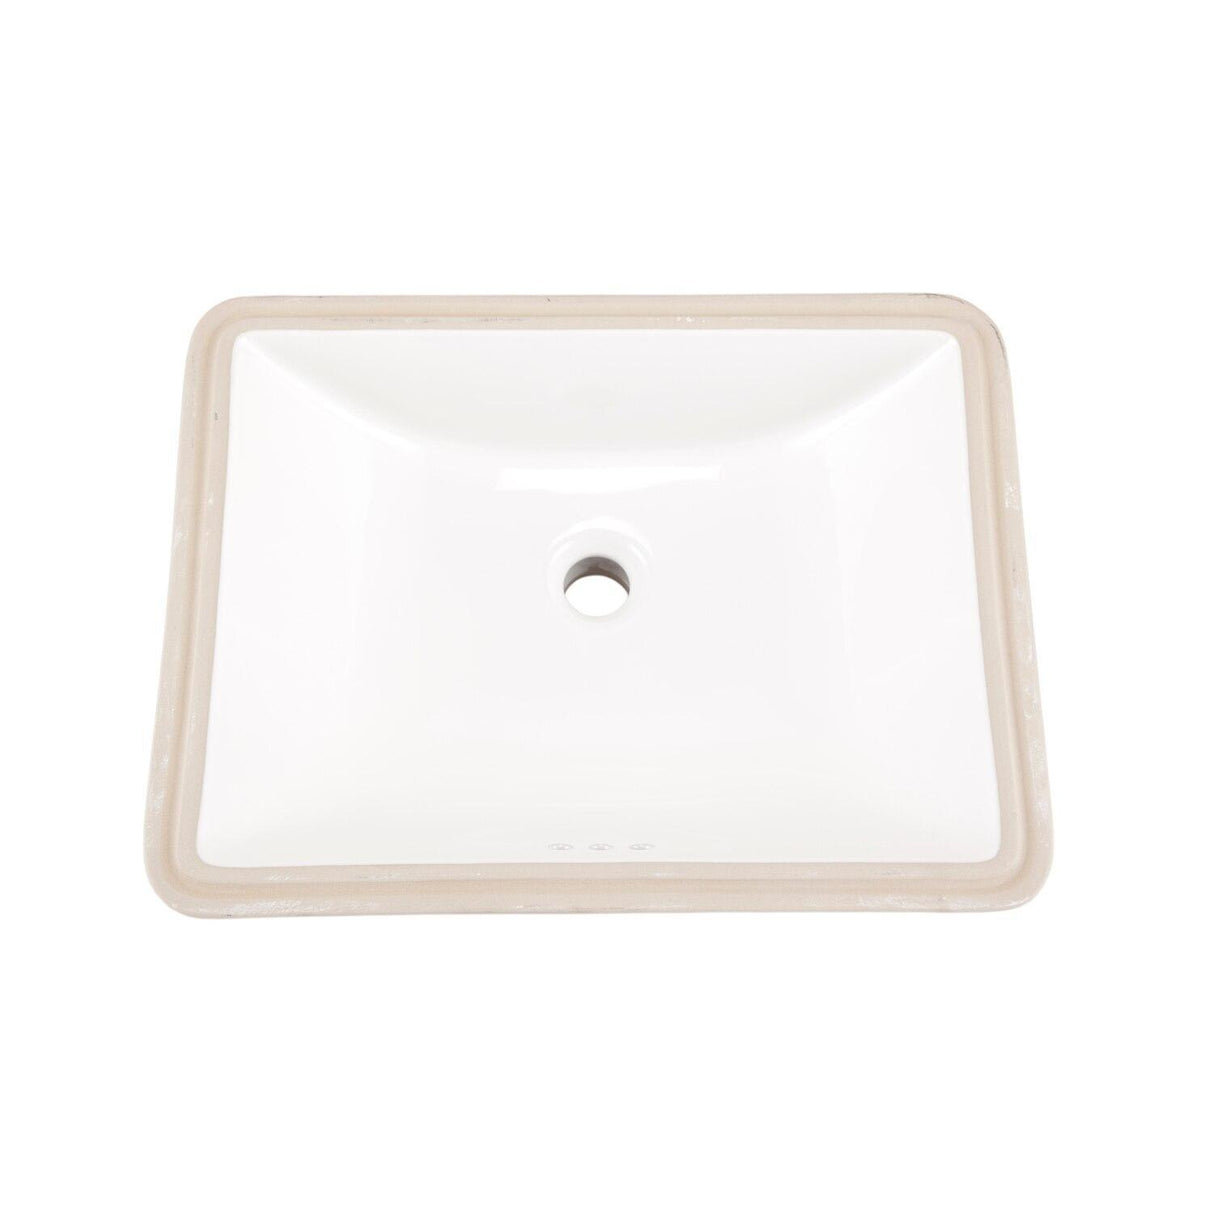 Gerber G0012765 White Logan Square Rectangular Petite Undercounter Bathroom Sink